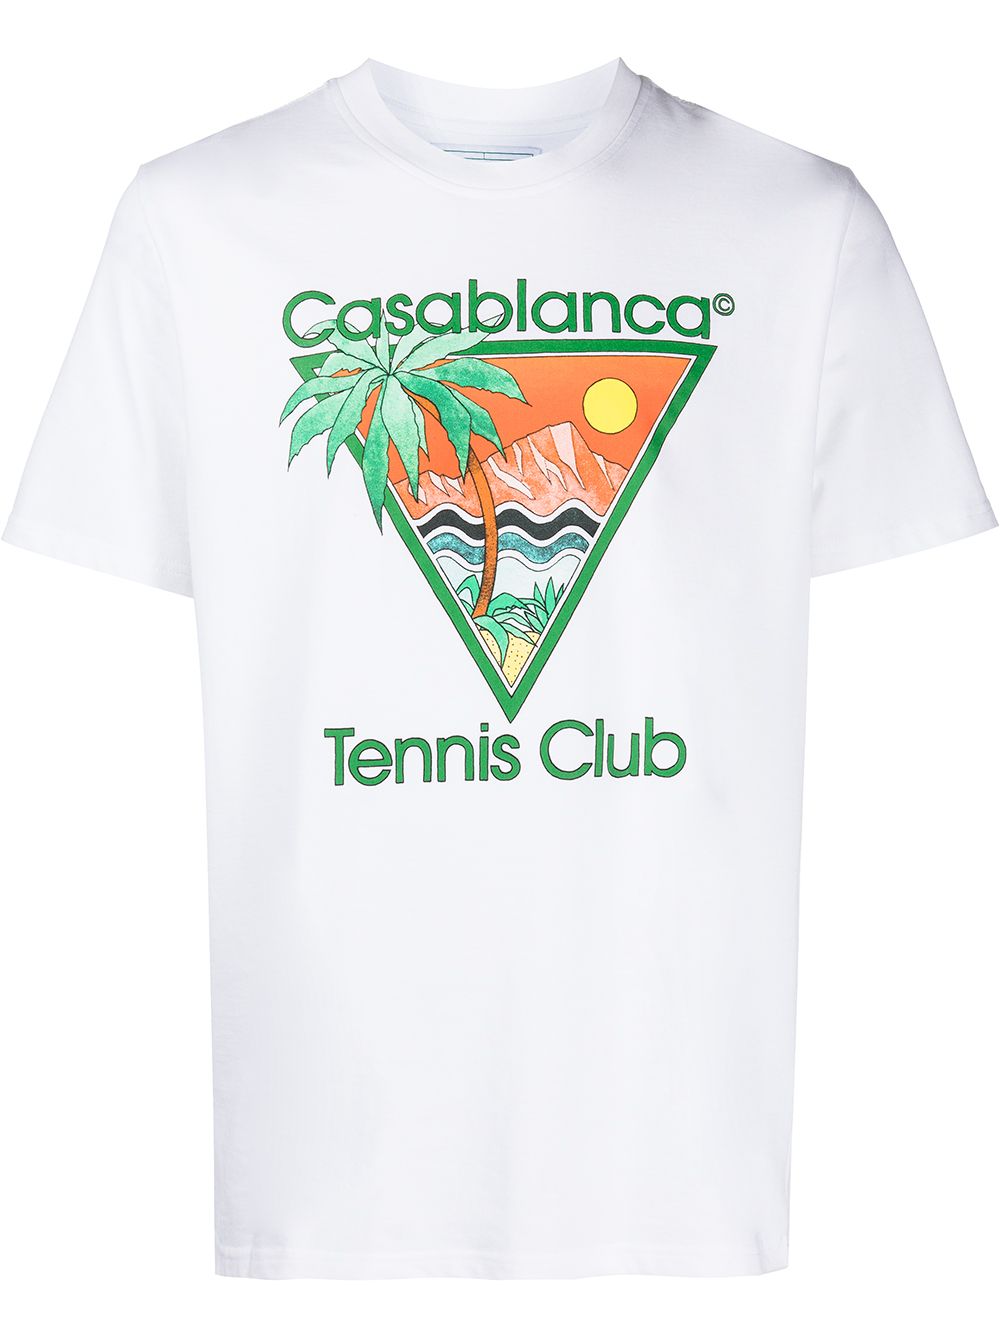 фото Casablanca футболка tennis club